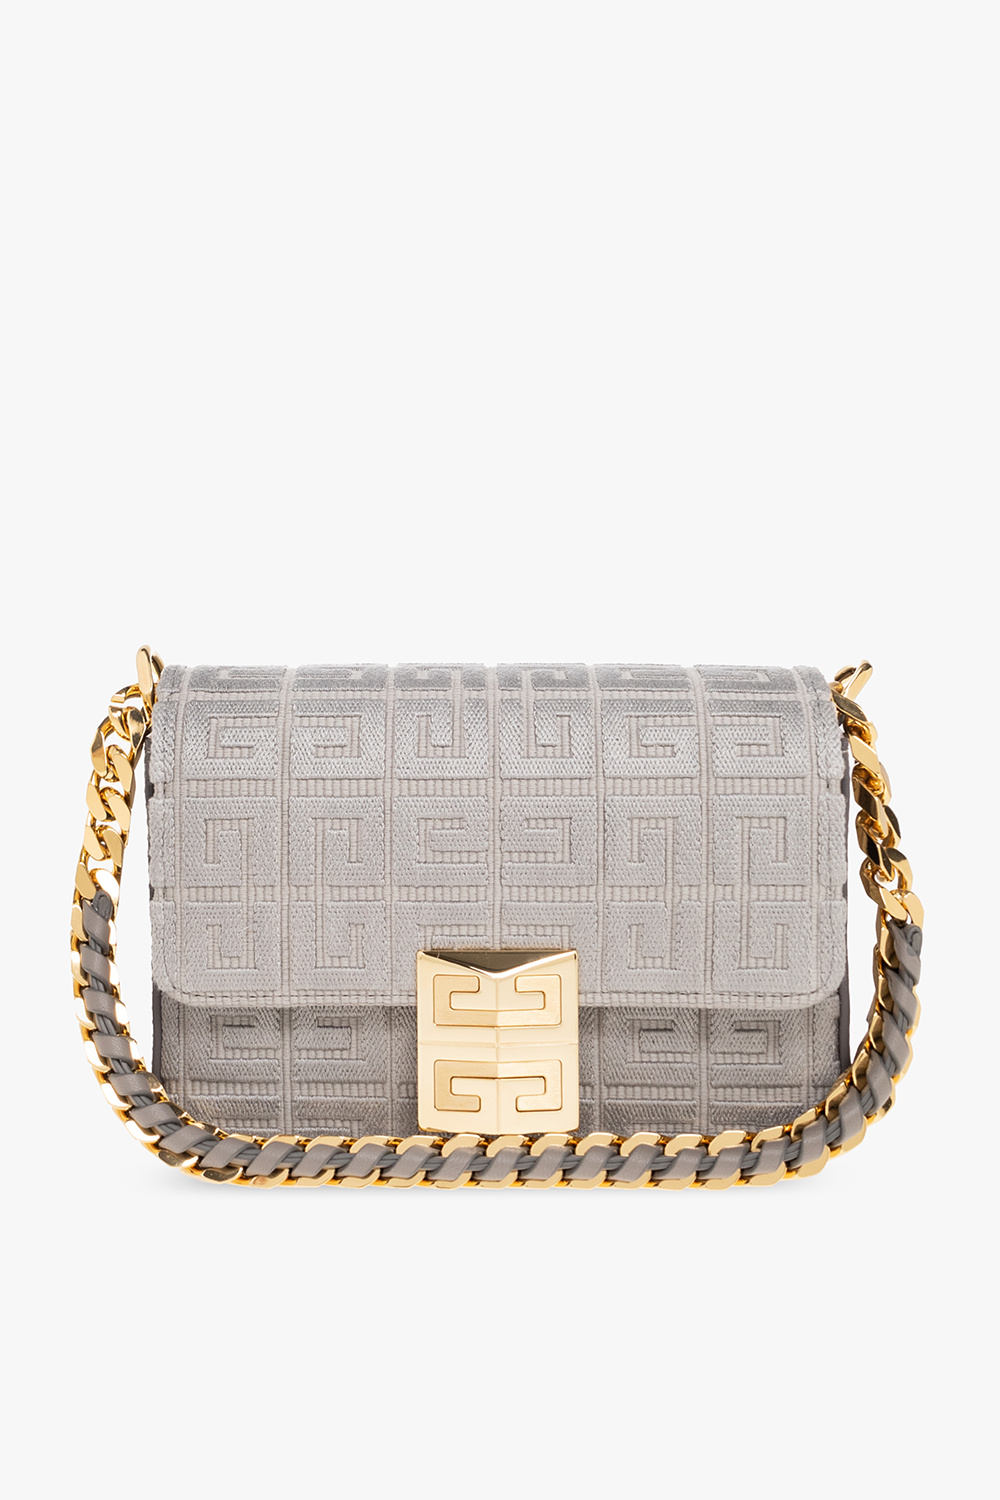 Givenchy ‘4G Small’ shoulder bag